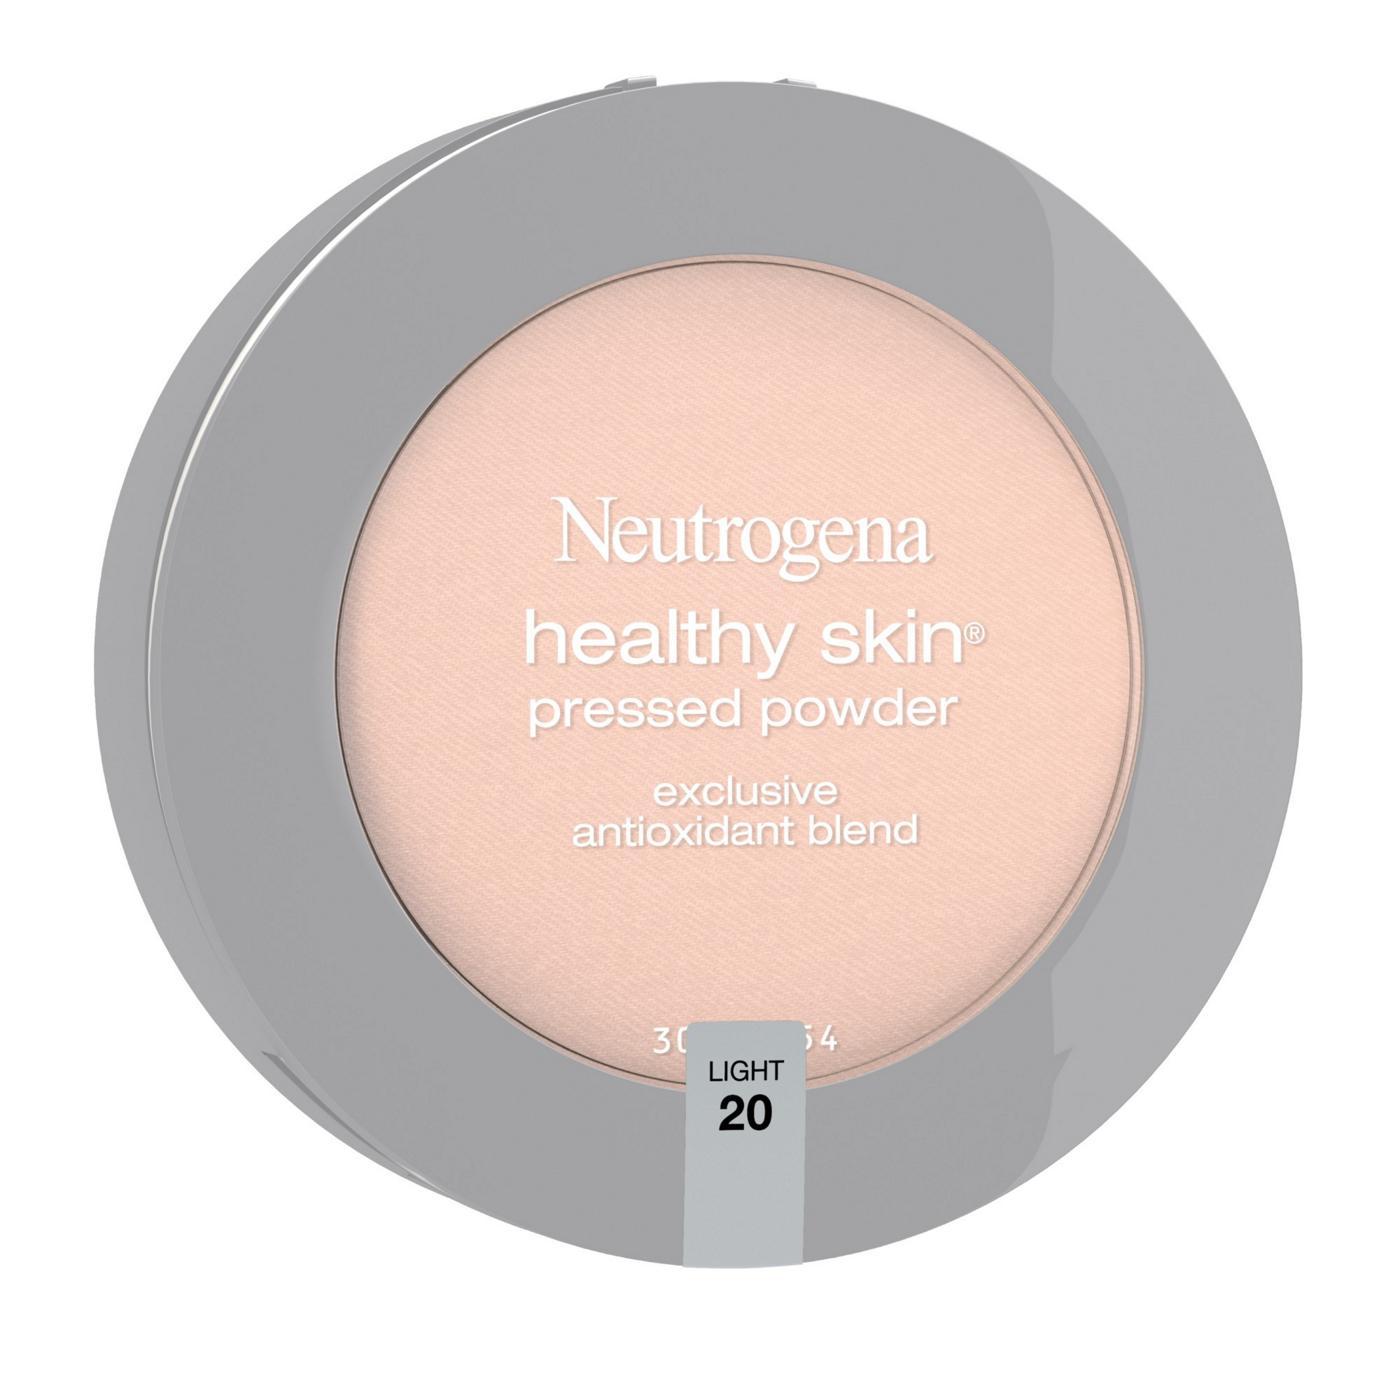 Neutrogena Healthy Skin Pressed Powder 20 Light; image 4 of 5